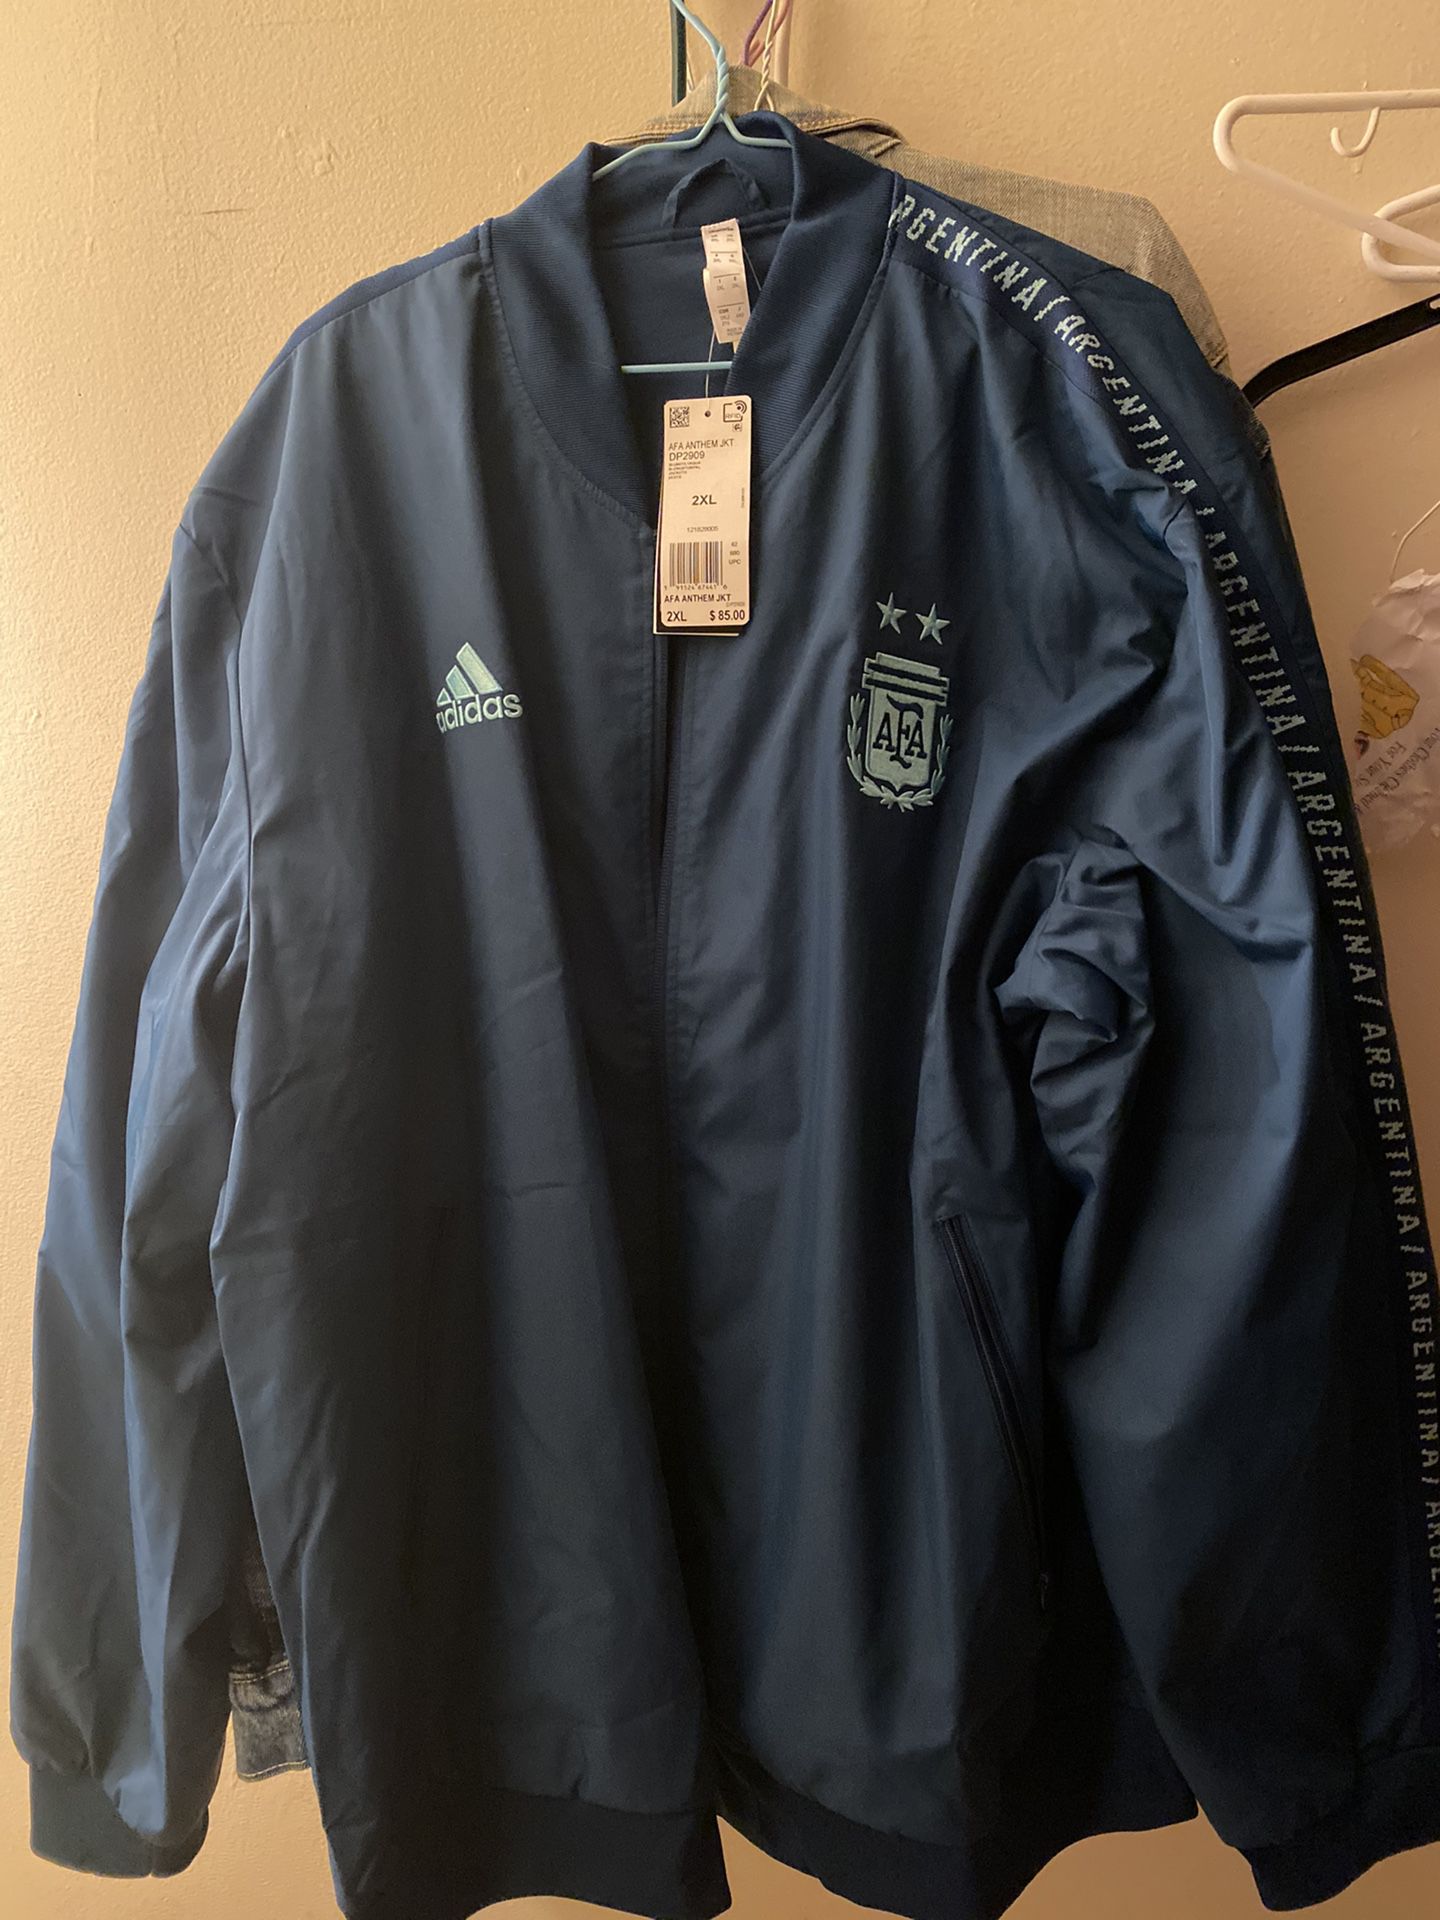 Adidas soccer Argentina jacket